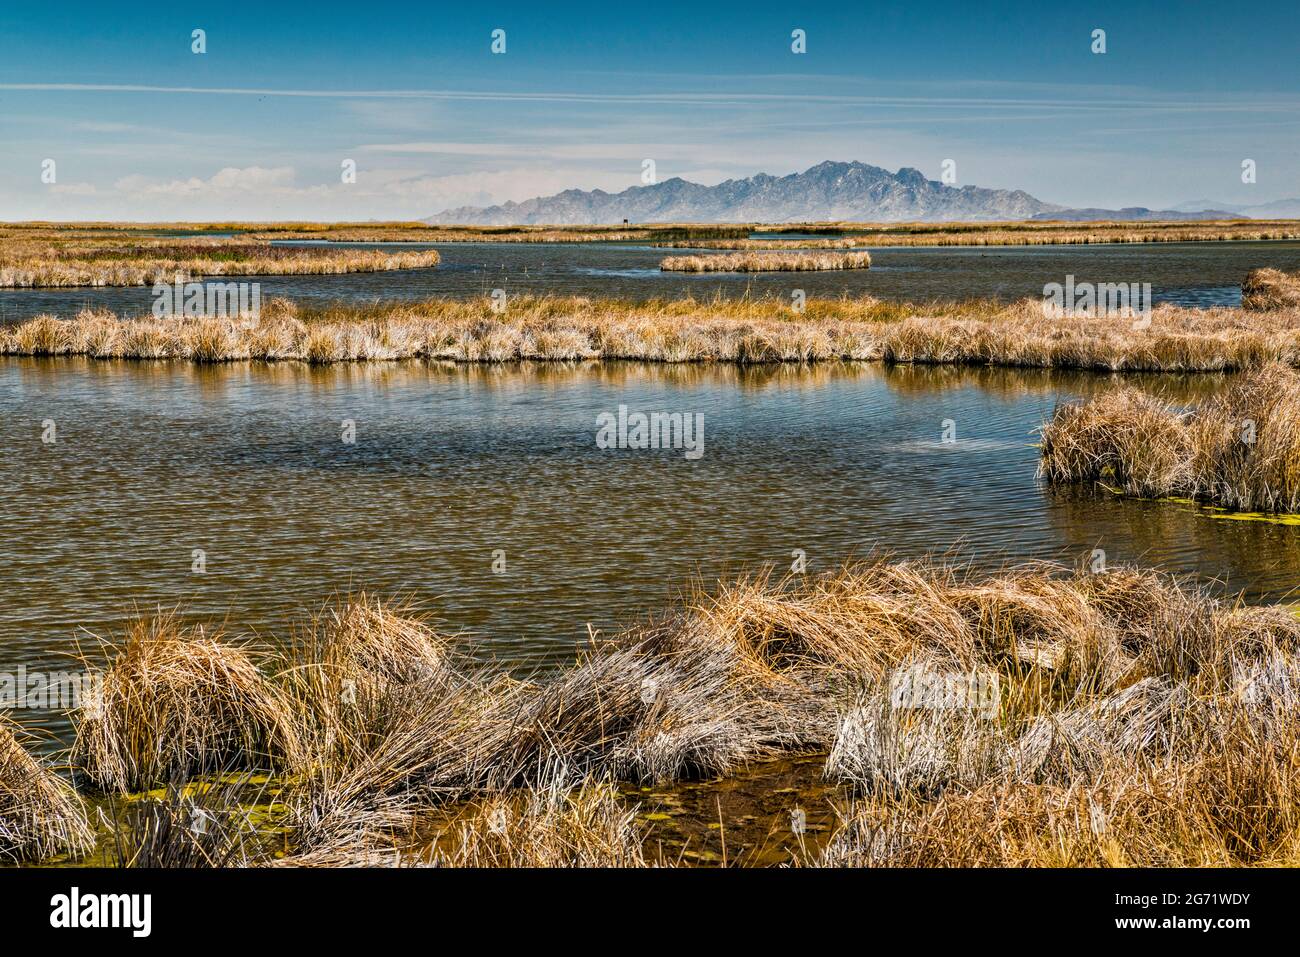 Piscine aquatique à la réserve naturelle nationale de Fish Springs, Dugway Range in Dist, Pony Express Trail, Back Country Byway, Fish Springs Flat, Great Basin Utah Banque D'Images